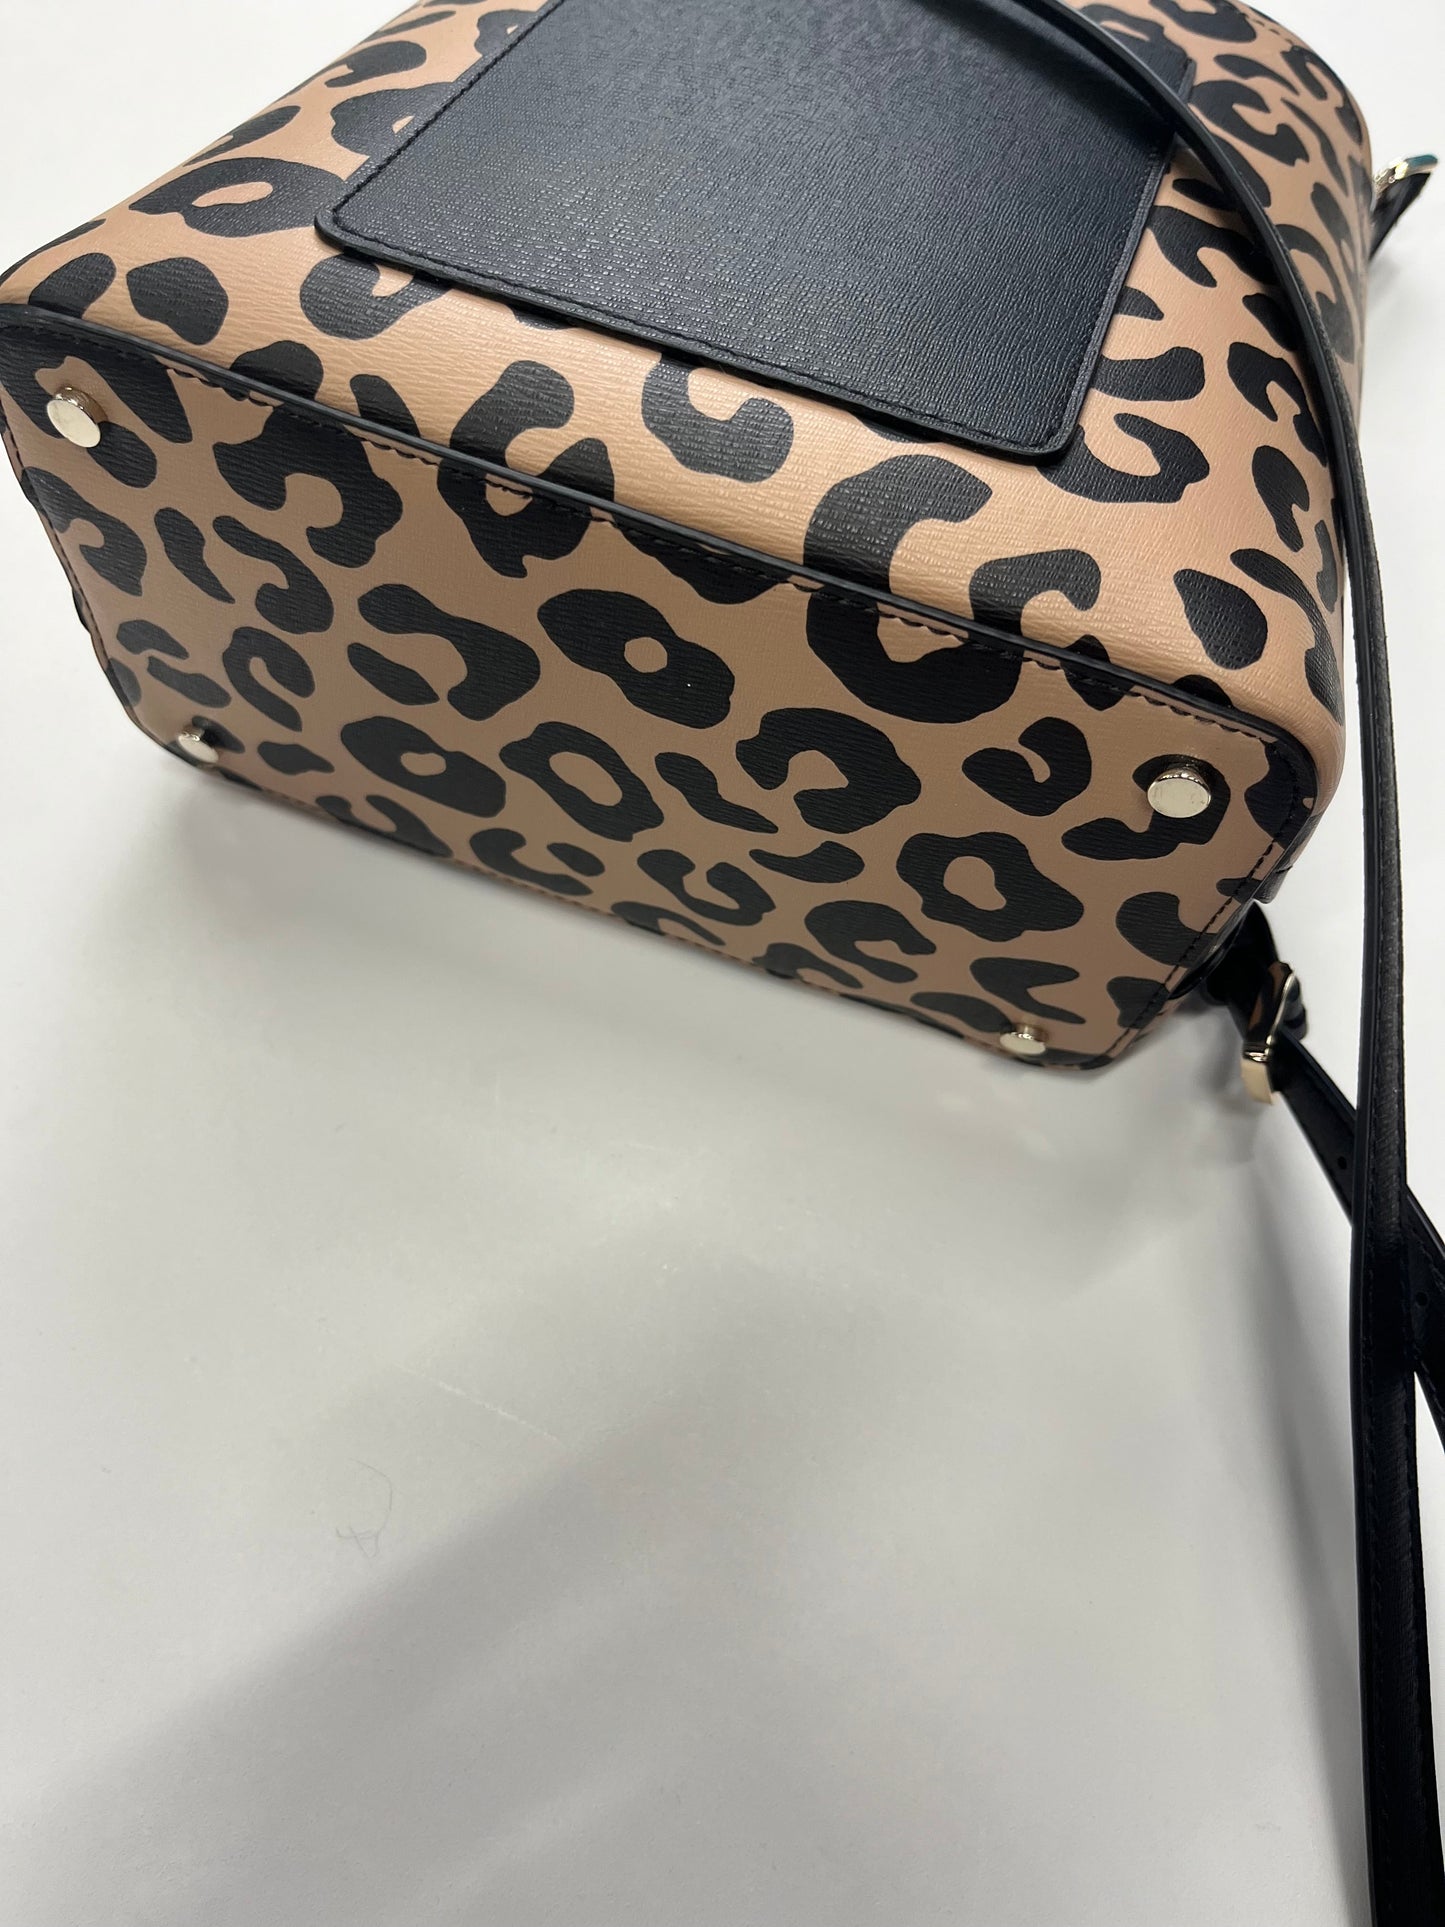 Animal Print Handbag Designer Kate Spade NWT, Size Medium